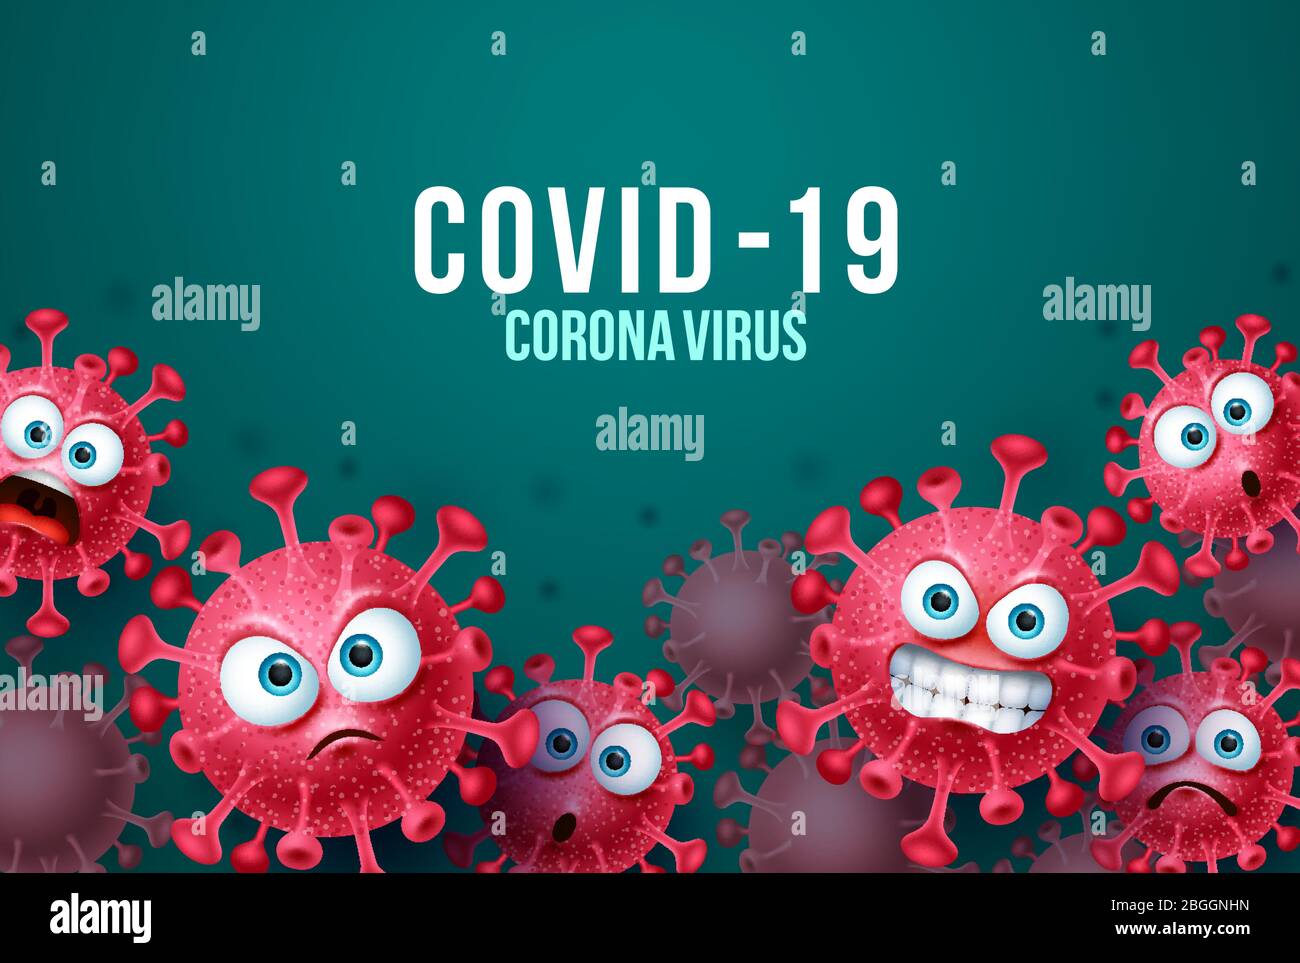 Covid-19 Corona Virus Vektor Hintergrundvorlage. Corona Virus Hintergrund mit wütend und beängstigend covid-19 Emoticons und Emojis im Hintergrund. Stock Vektor